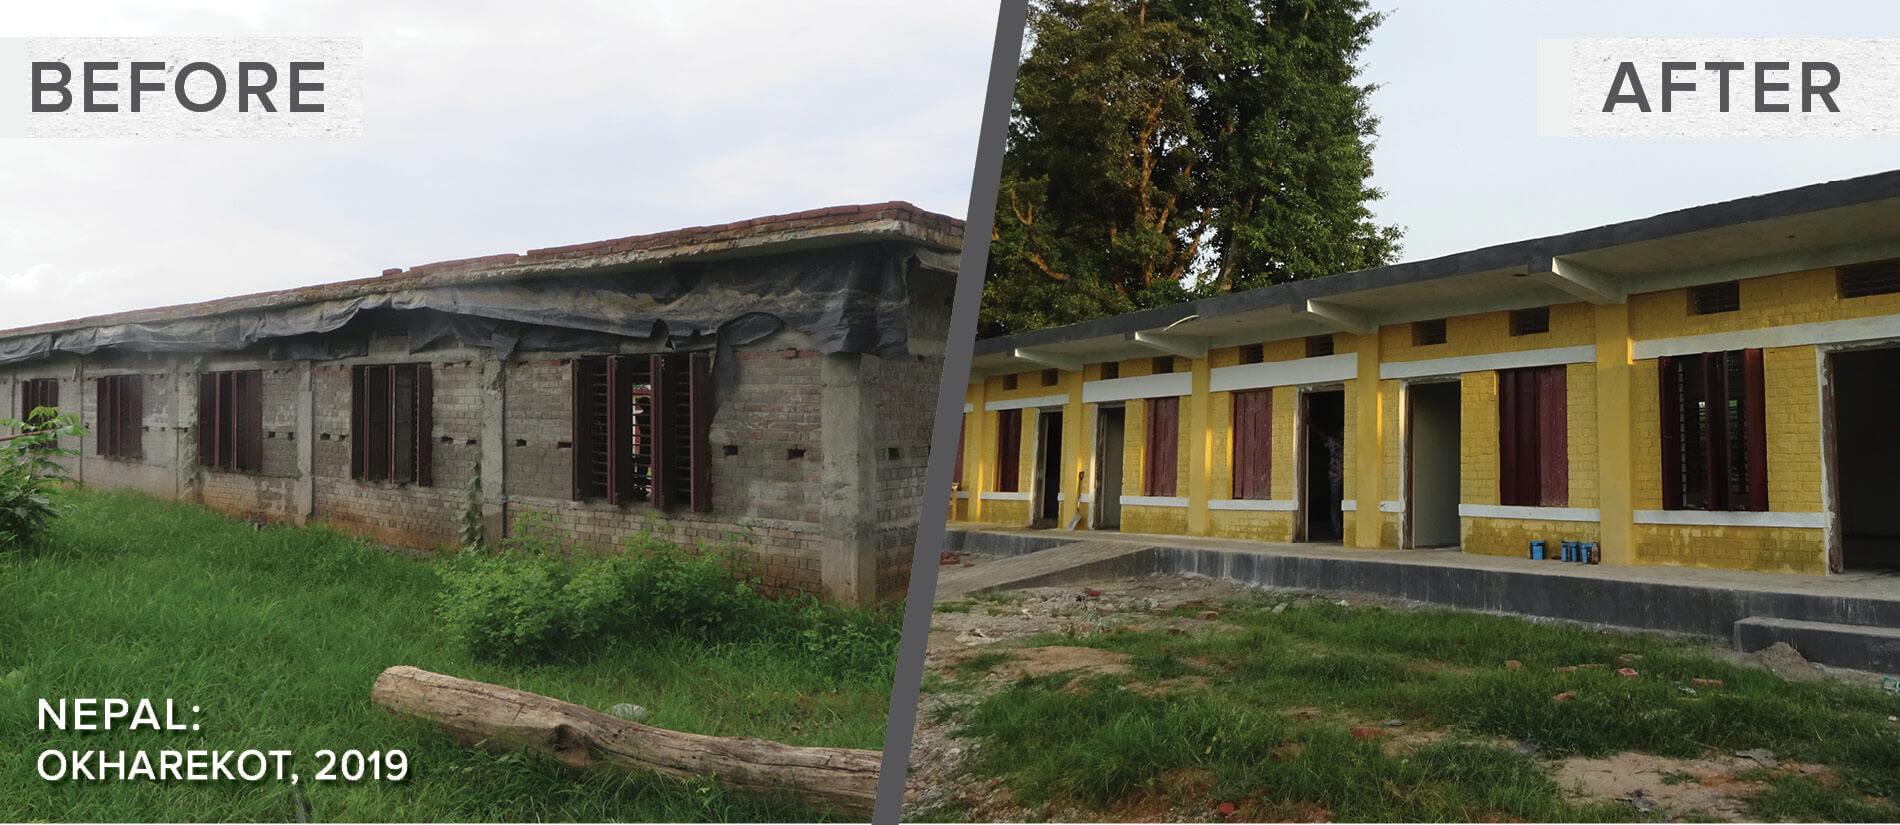 buildOn - Okharekot, Nepal - Before After_1900x825 - Dual Concept - 2021 (1)